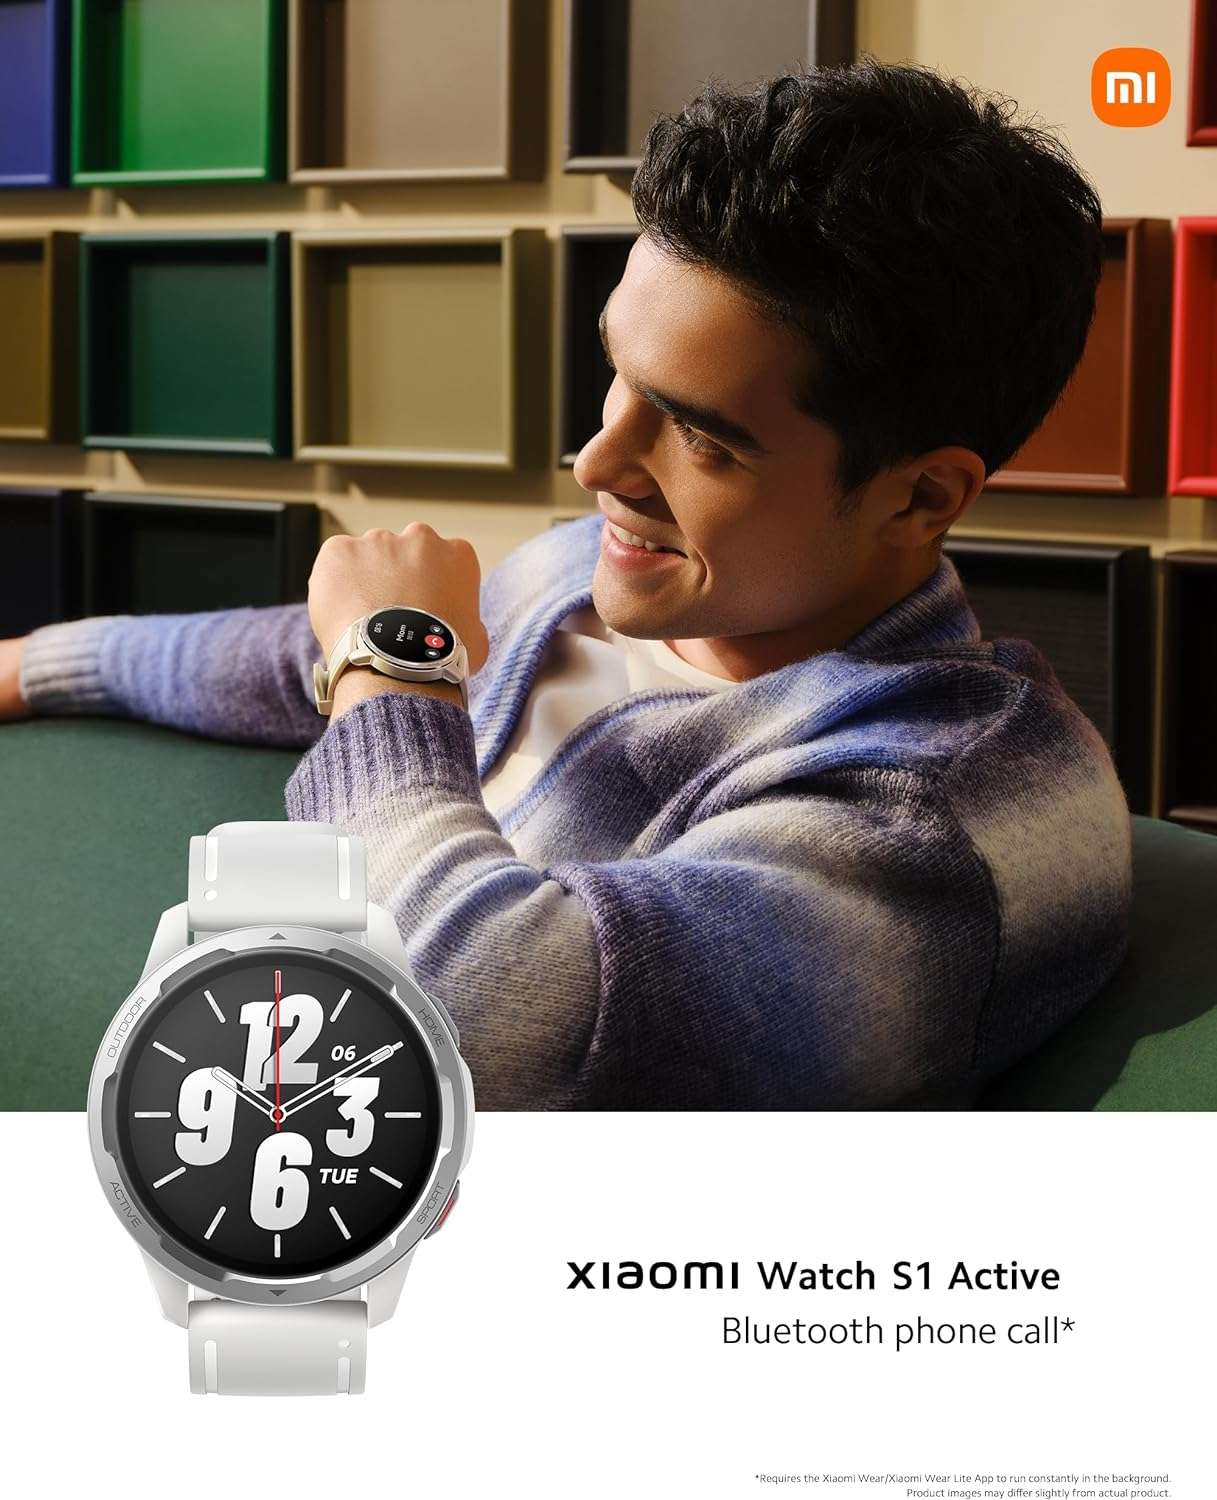 xiaomi-watch-s1-active-offerta-62-per-black-friday-microfono